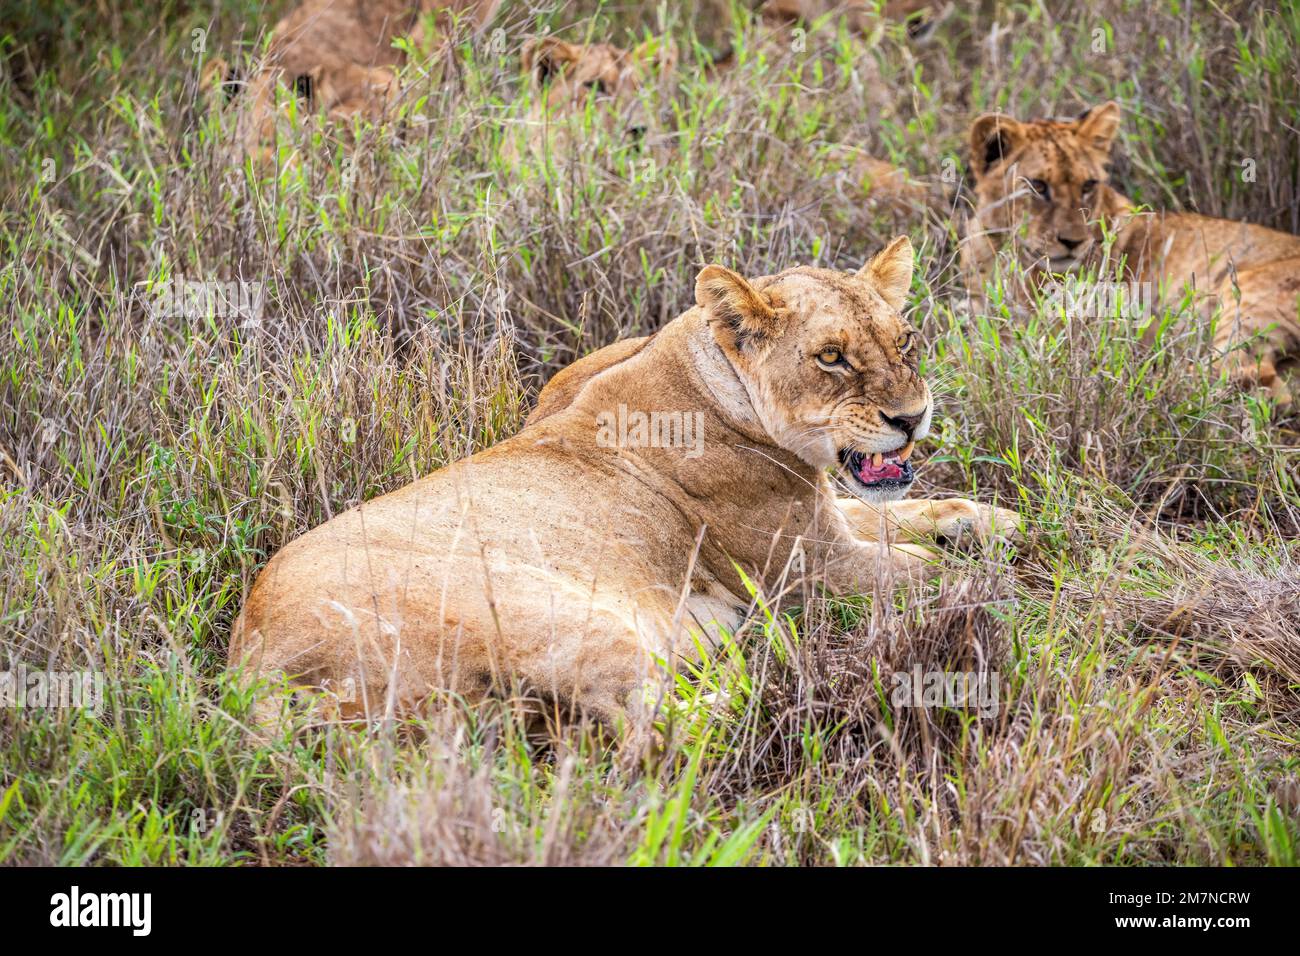 Lion family, lions in the grass of the savannah. Taken on a safari through Tsavo West National Park, Taita Hills, Tsavo, Kenya, Africa Stock Photo